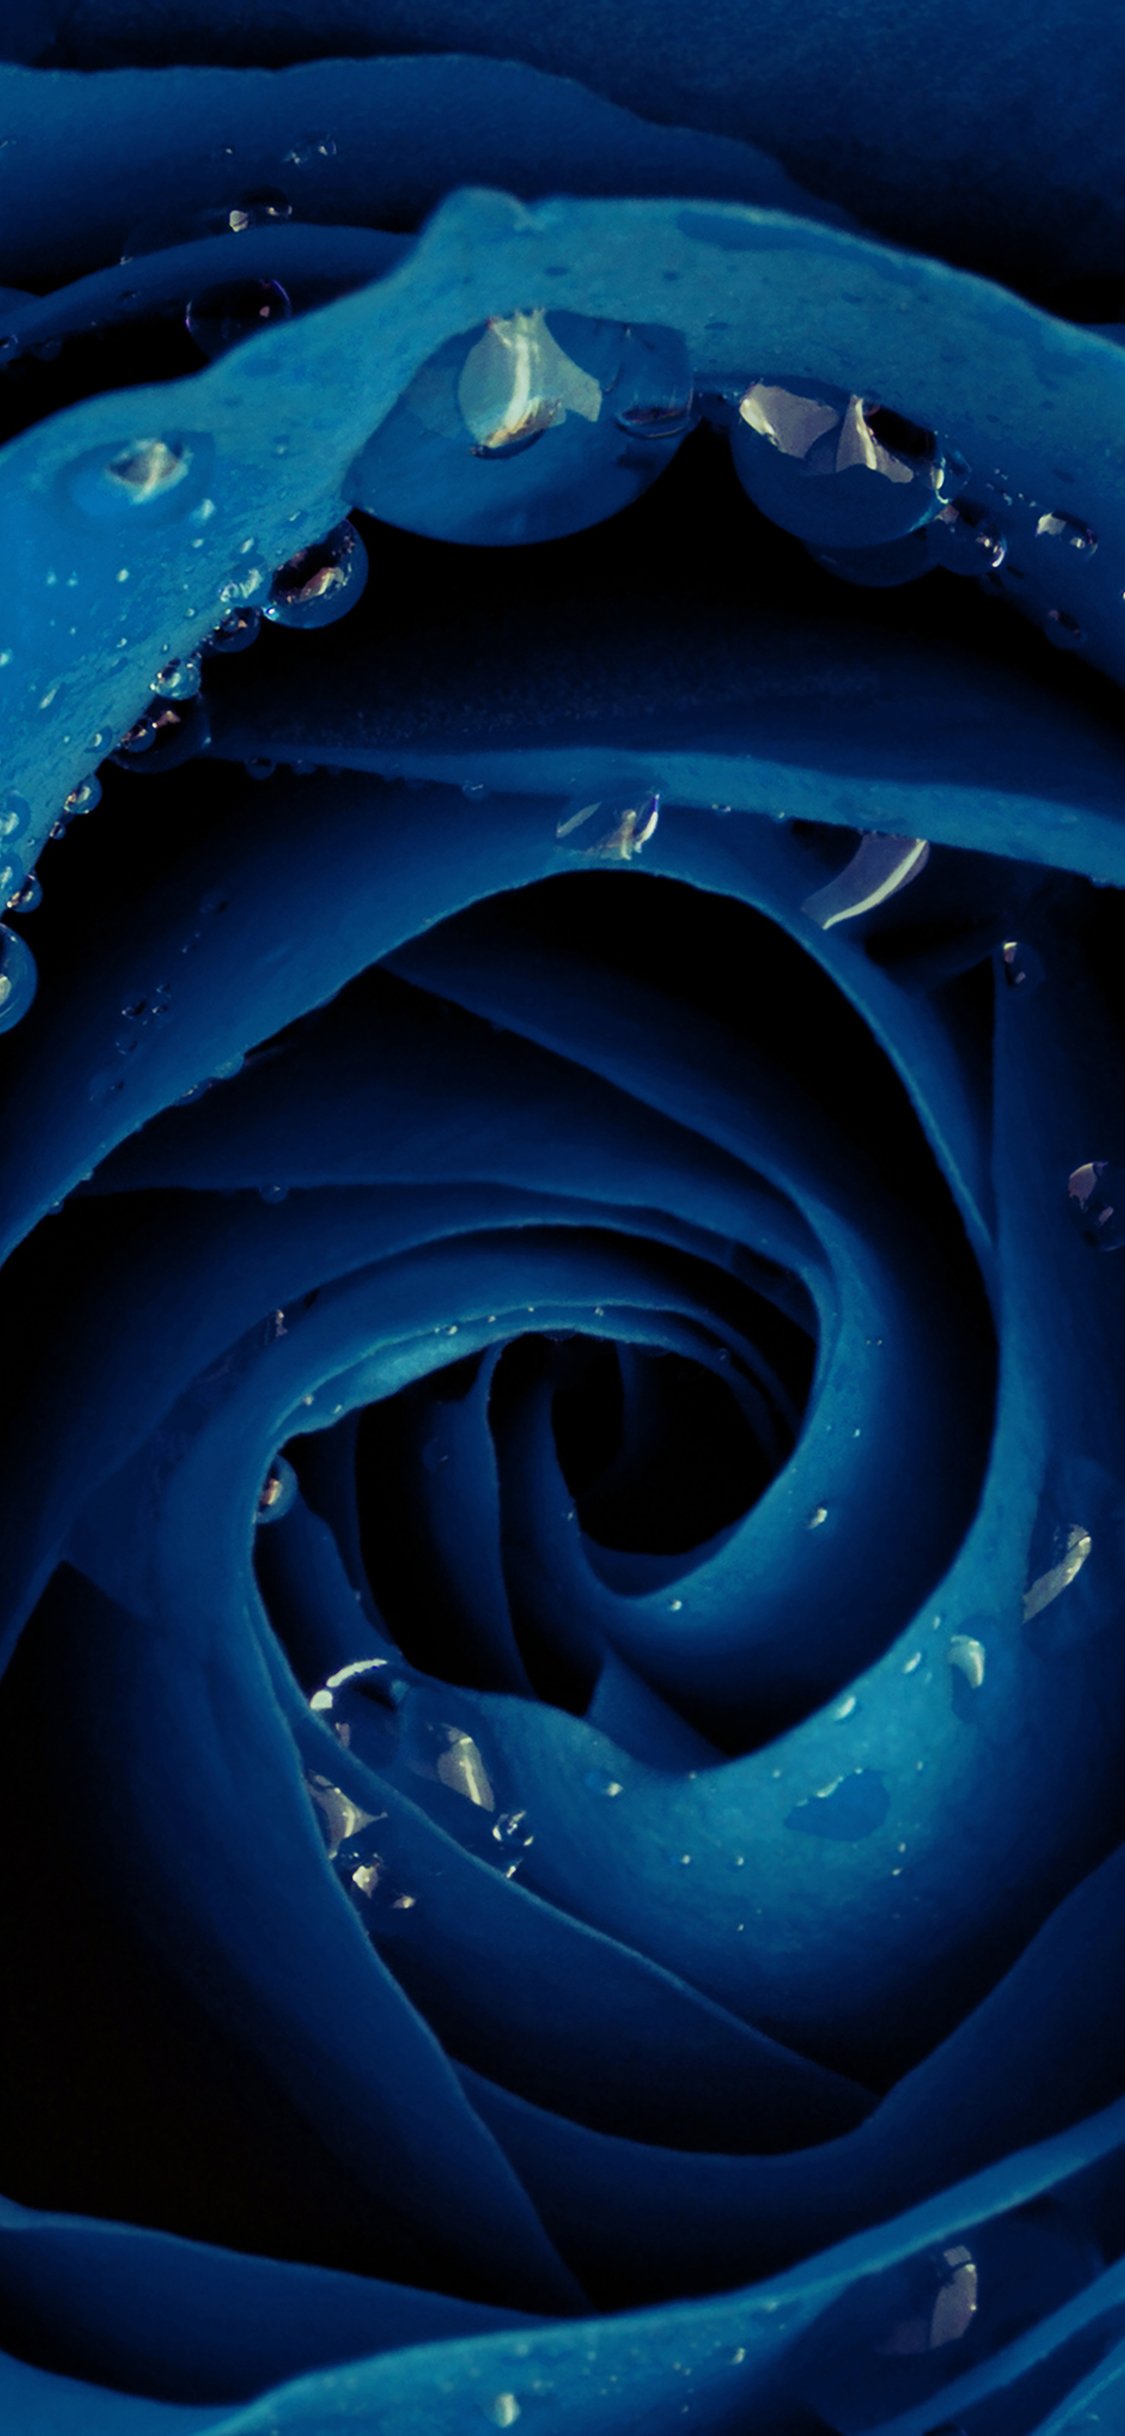 Beautiful blue rose flower iPhone X Wallpaper Free Download